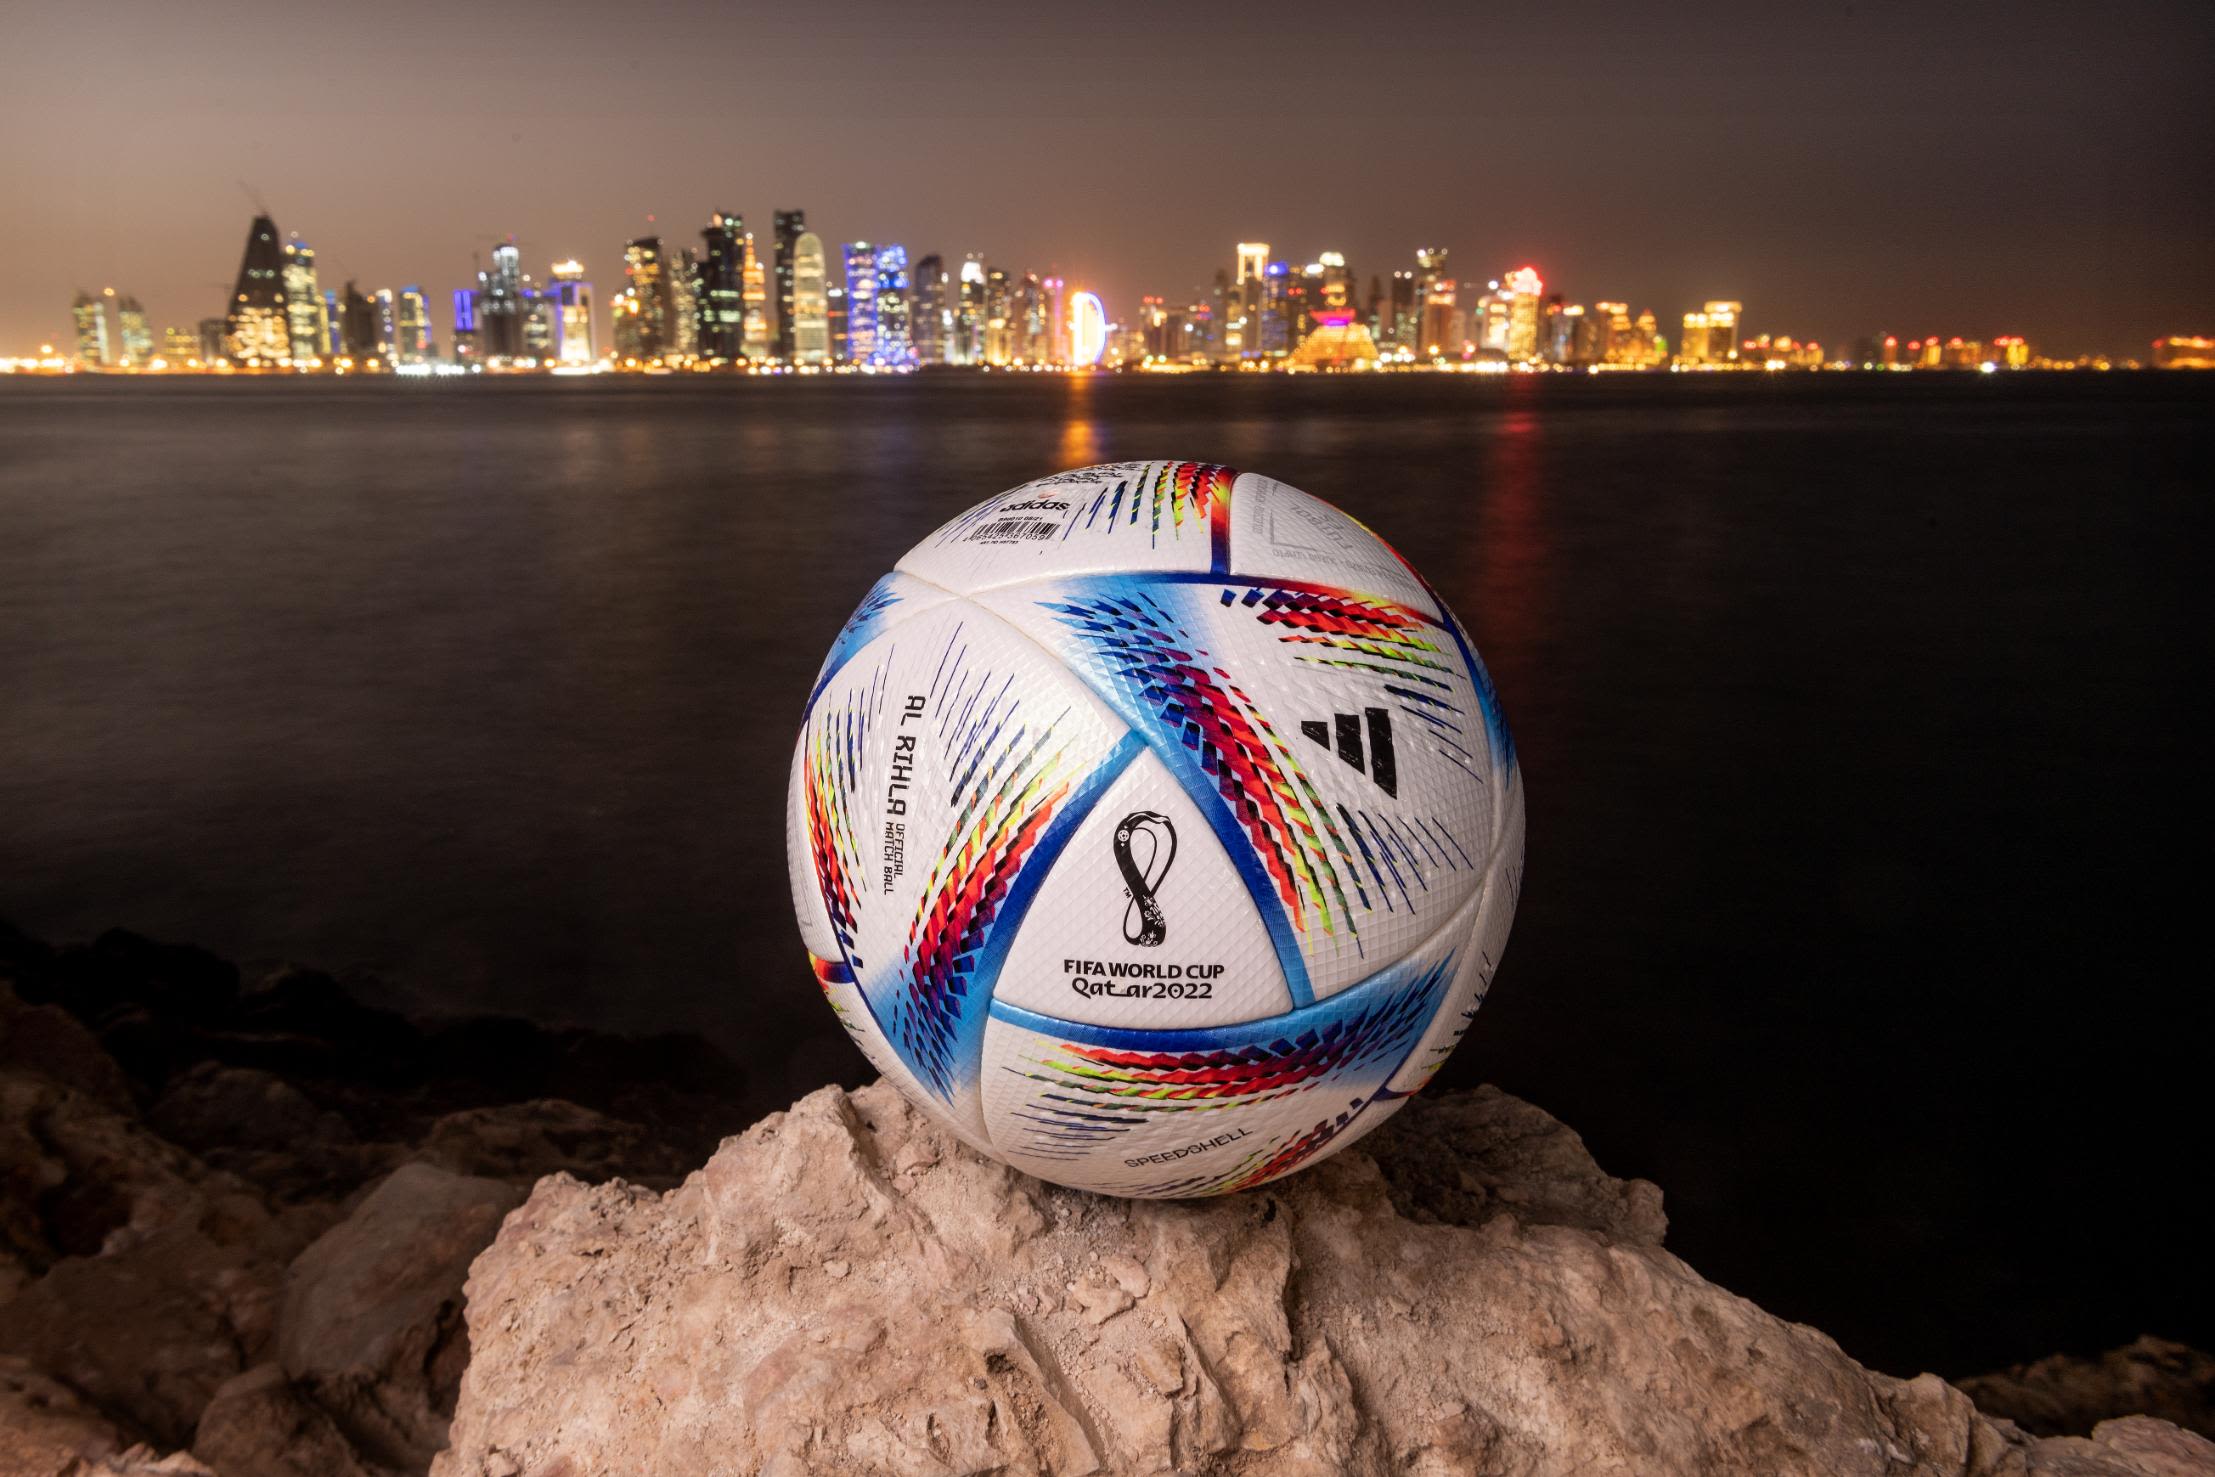 Qatar FIFA World Cup ambassador says homosexuality is 'damage in